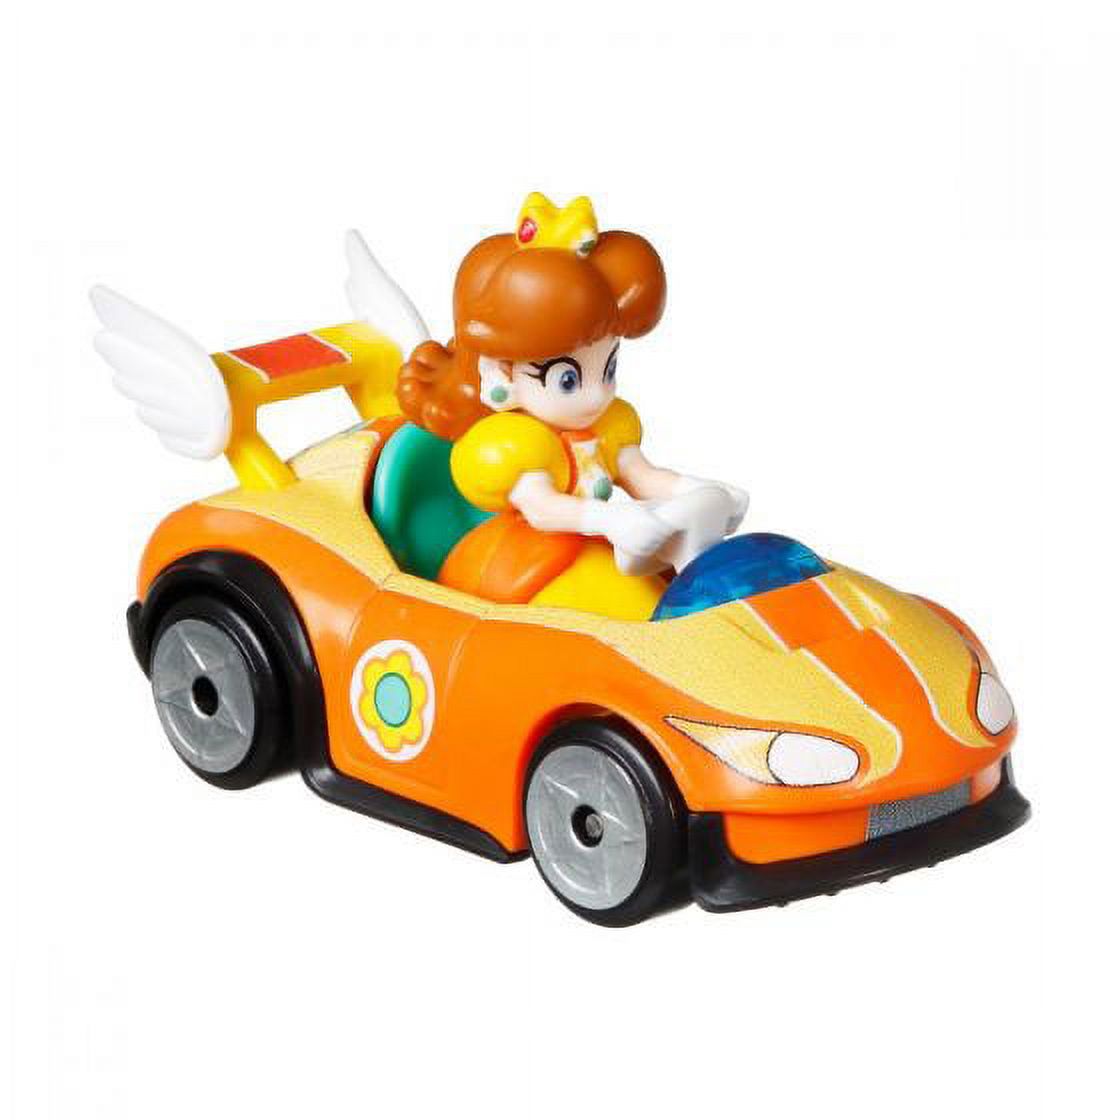 Hot Wheels Die-Cast Mario Kart Princess Daisy Wild Wings Car Play Vehicle - image 2 of 2